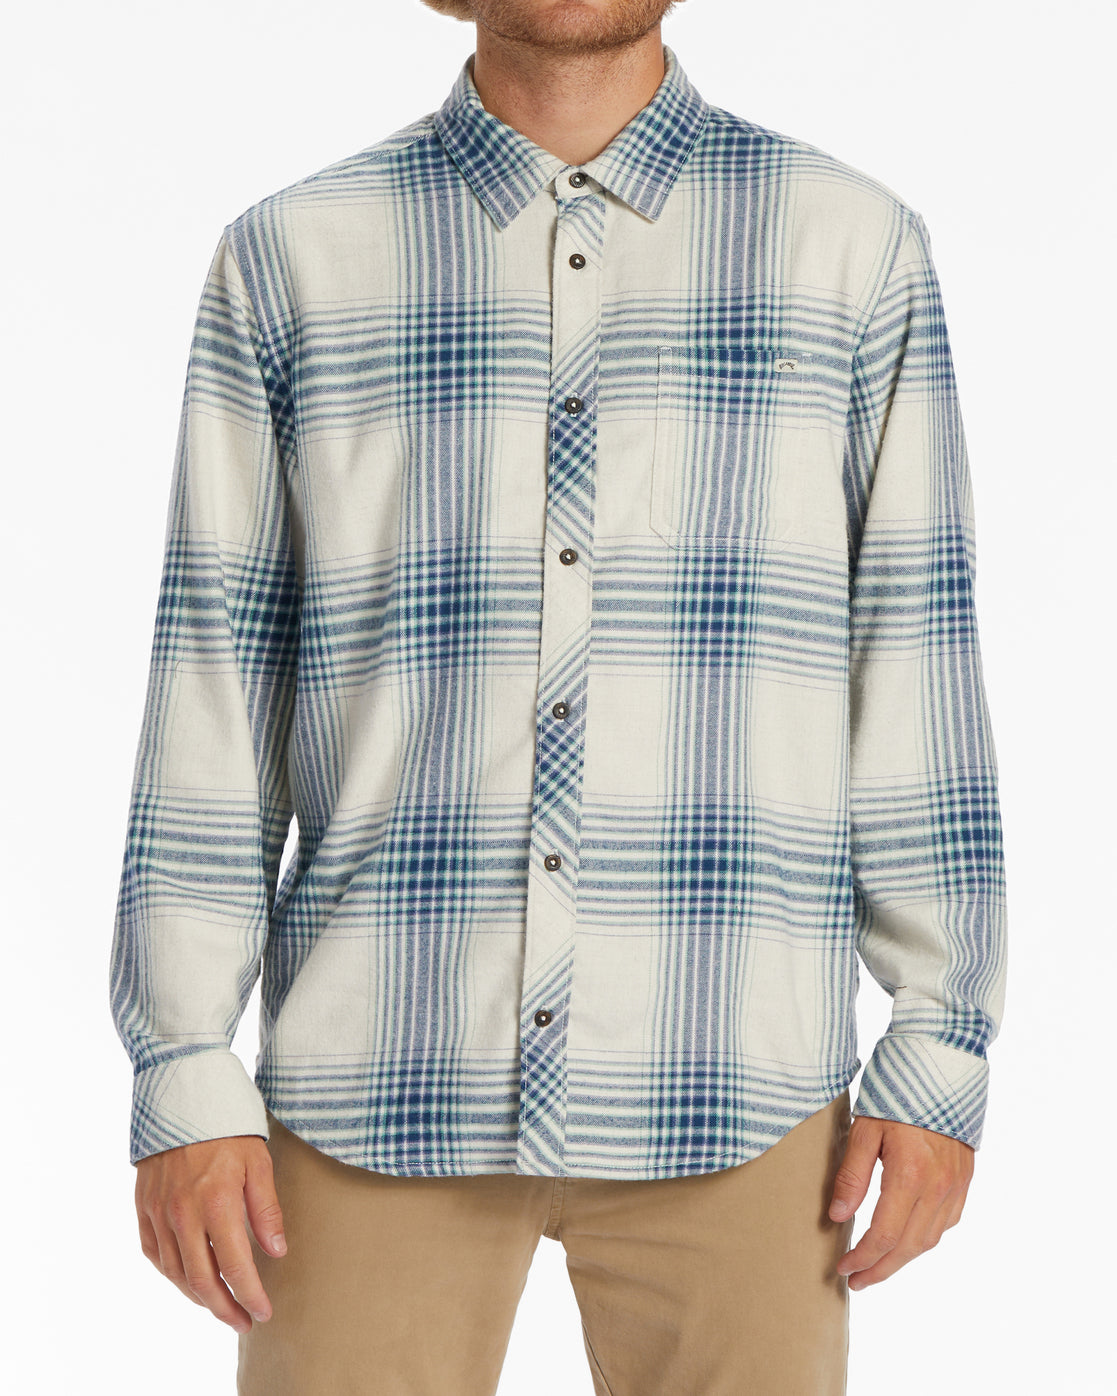 Coastline Flannel Long Sleeve Shirt - Stone